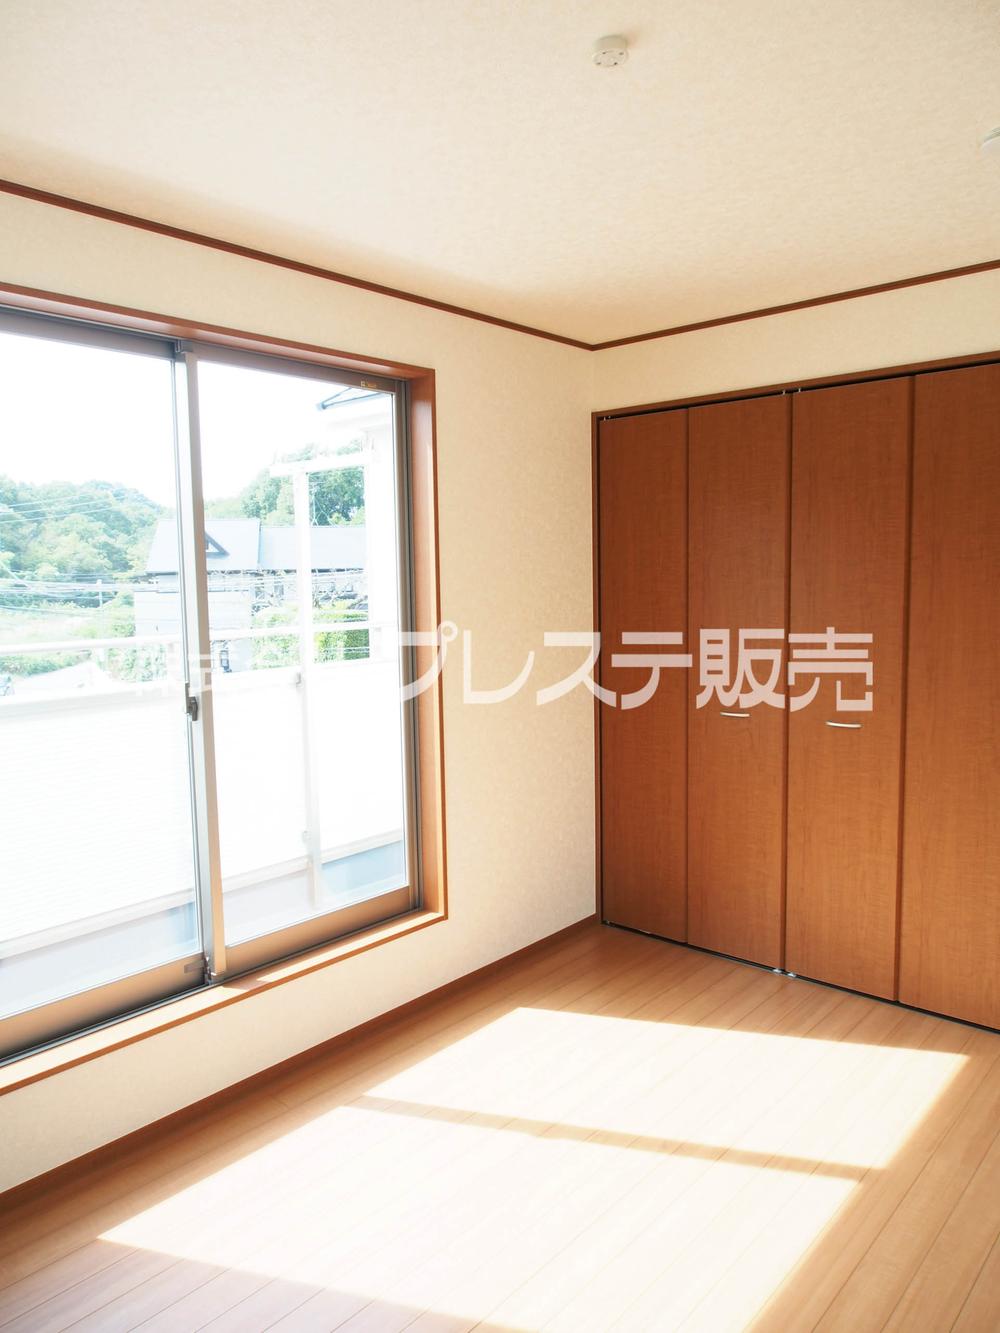 Non-living room. Local photo (No. 1 place 2 Kaikyoshitsu)